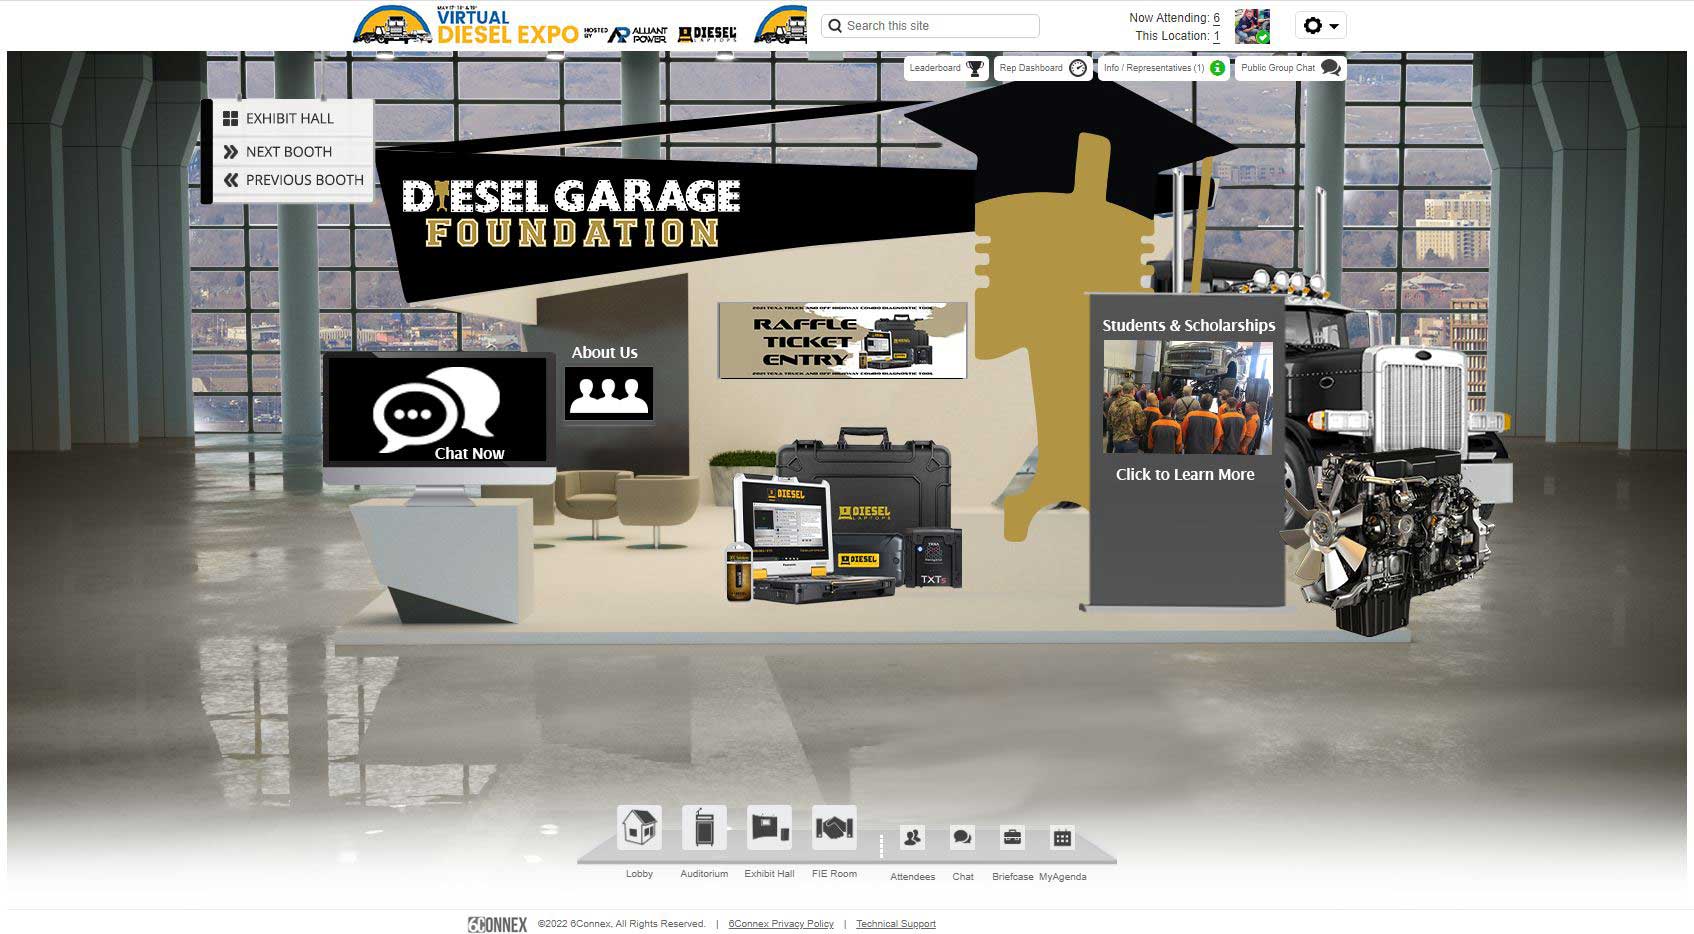 Virtual Expo Home Page